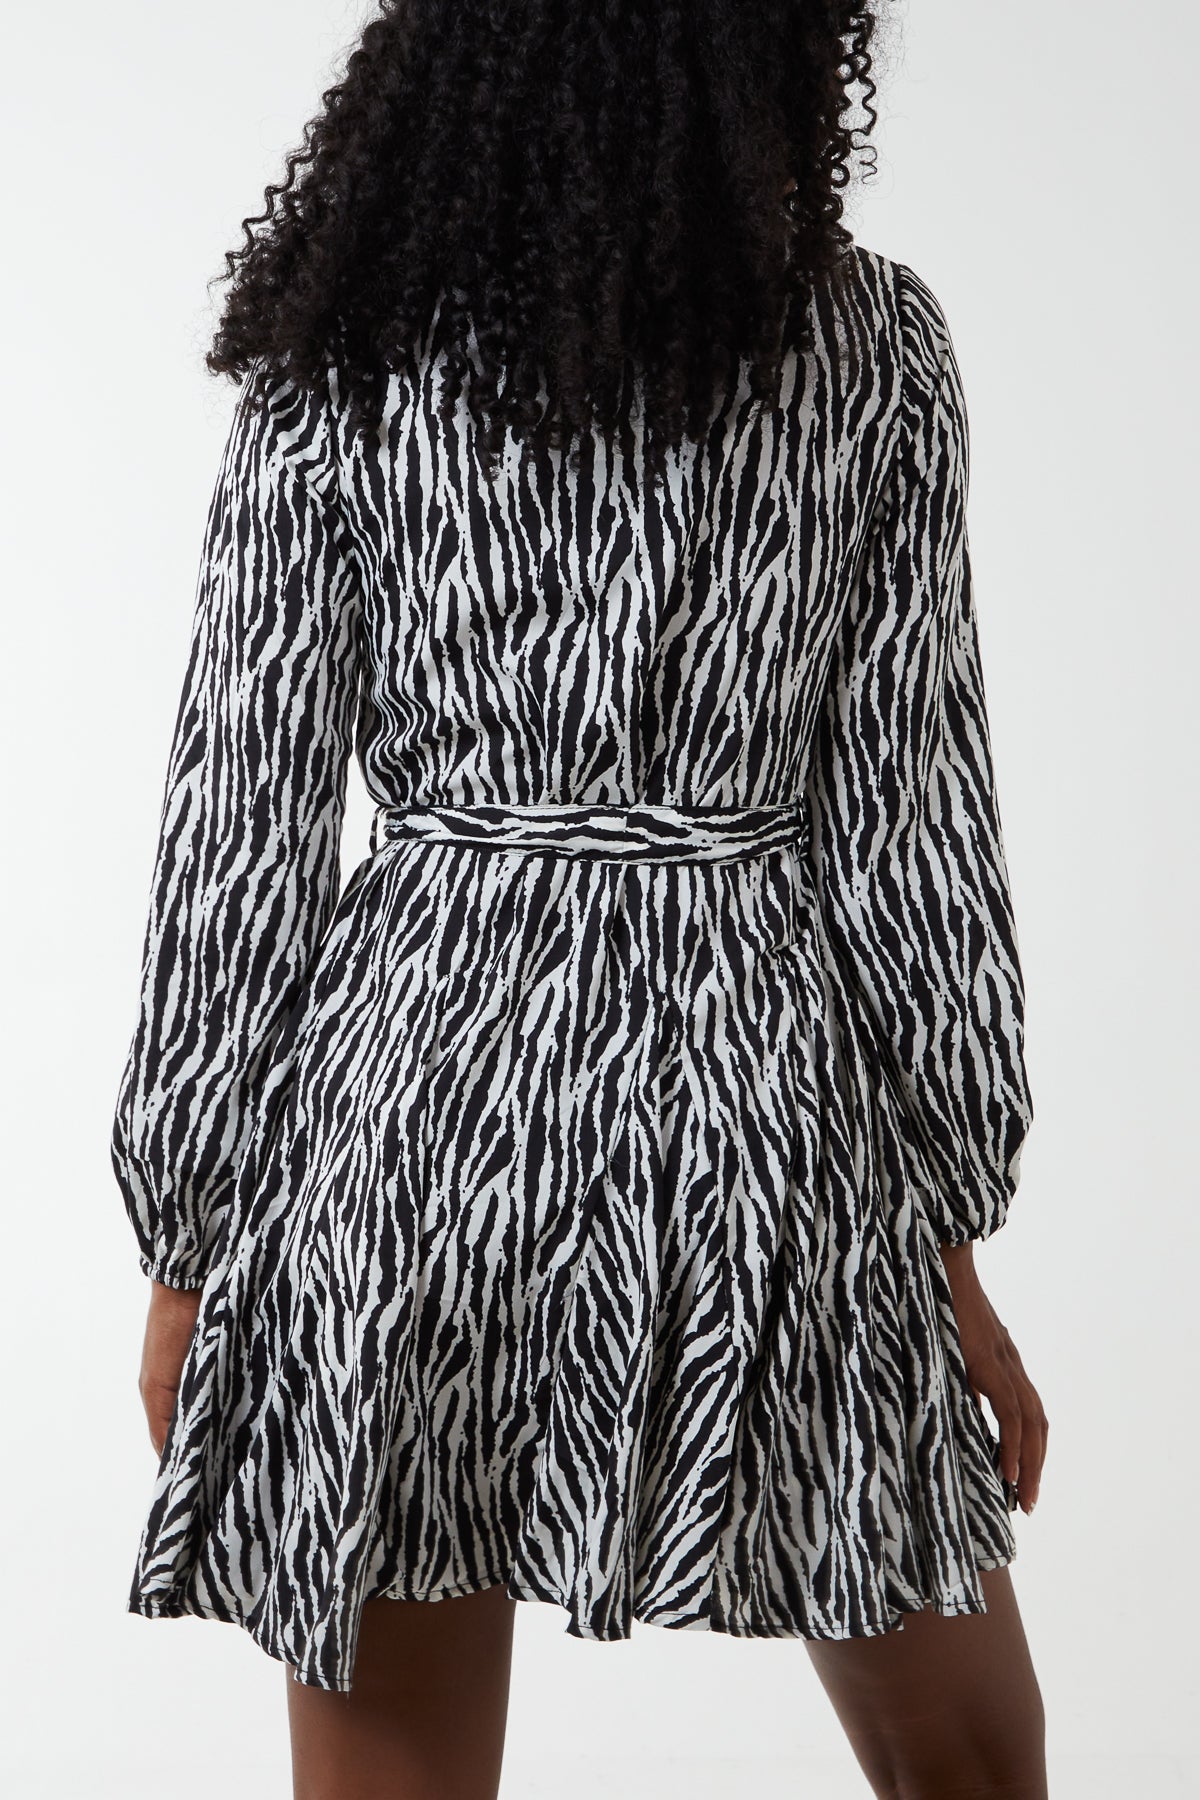 Abstract Zebra Print Shirt Dress With Skater Skirt